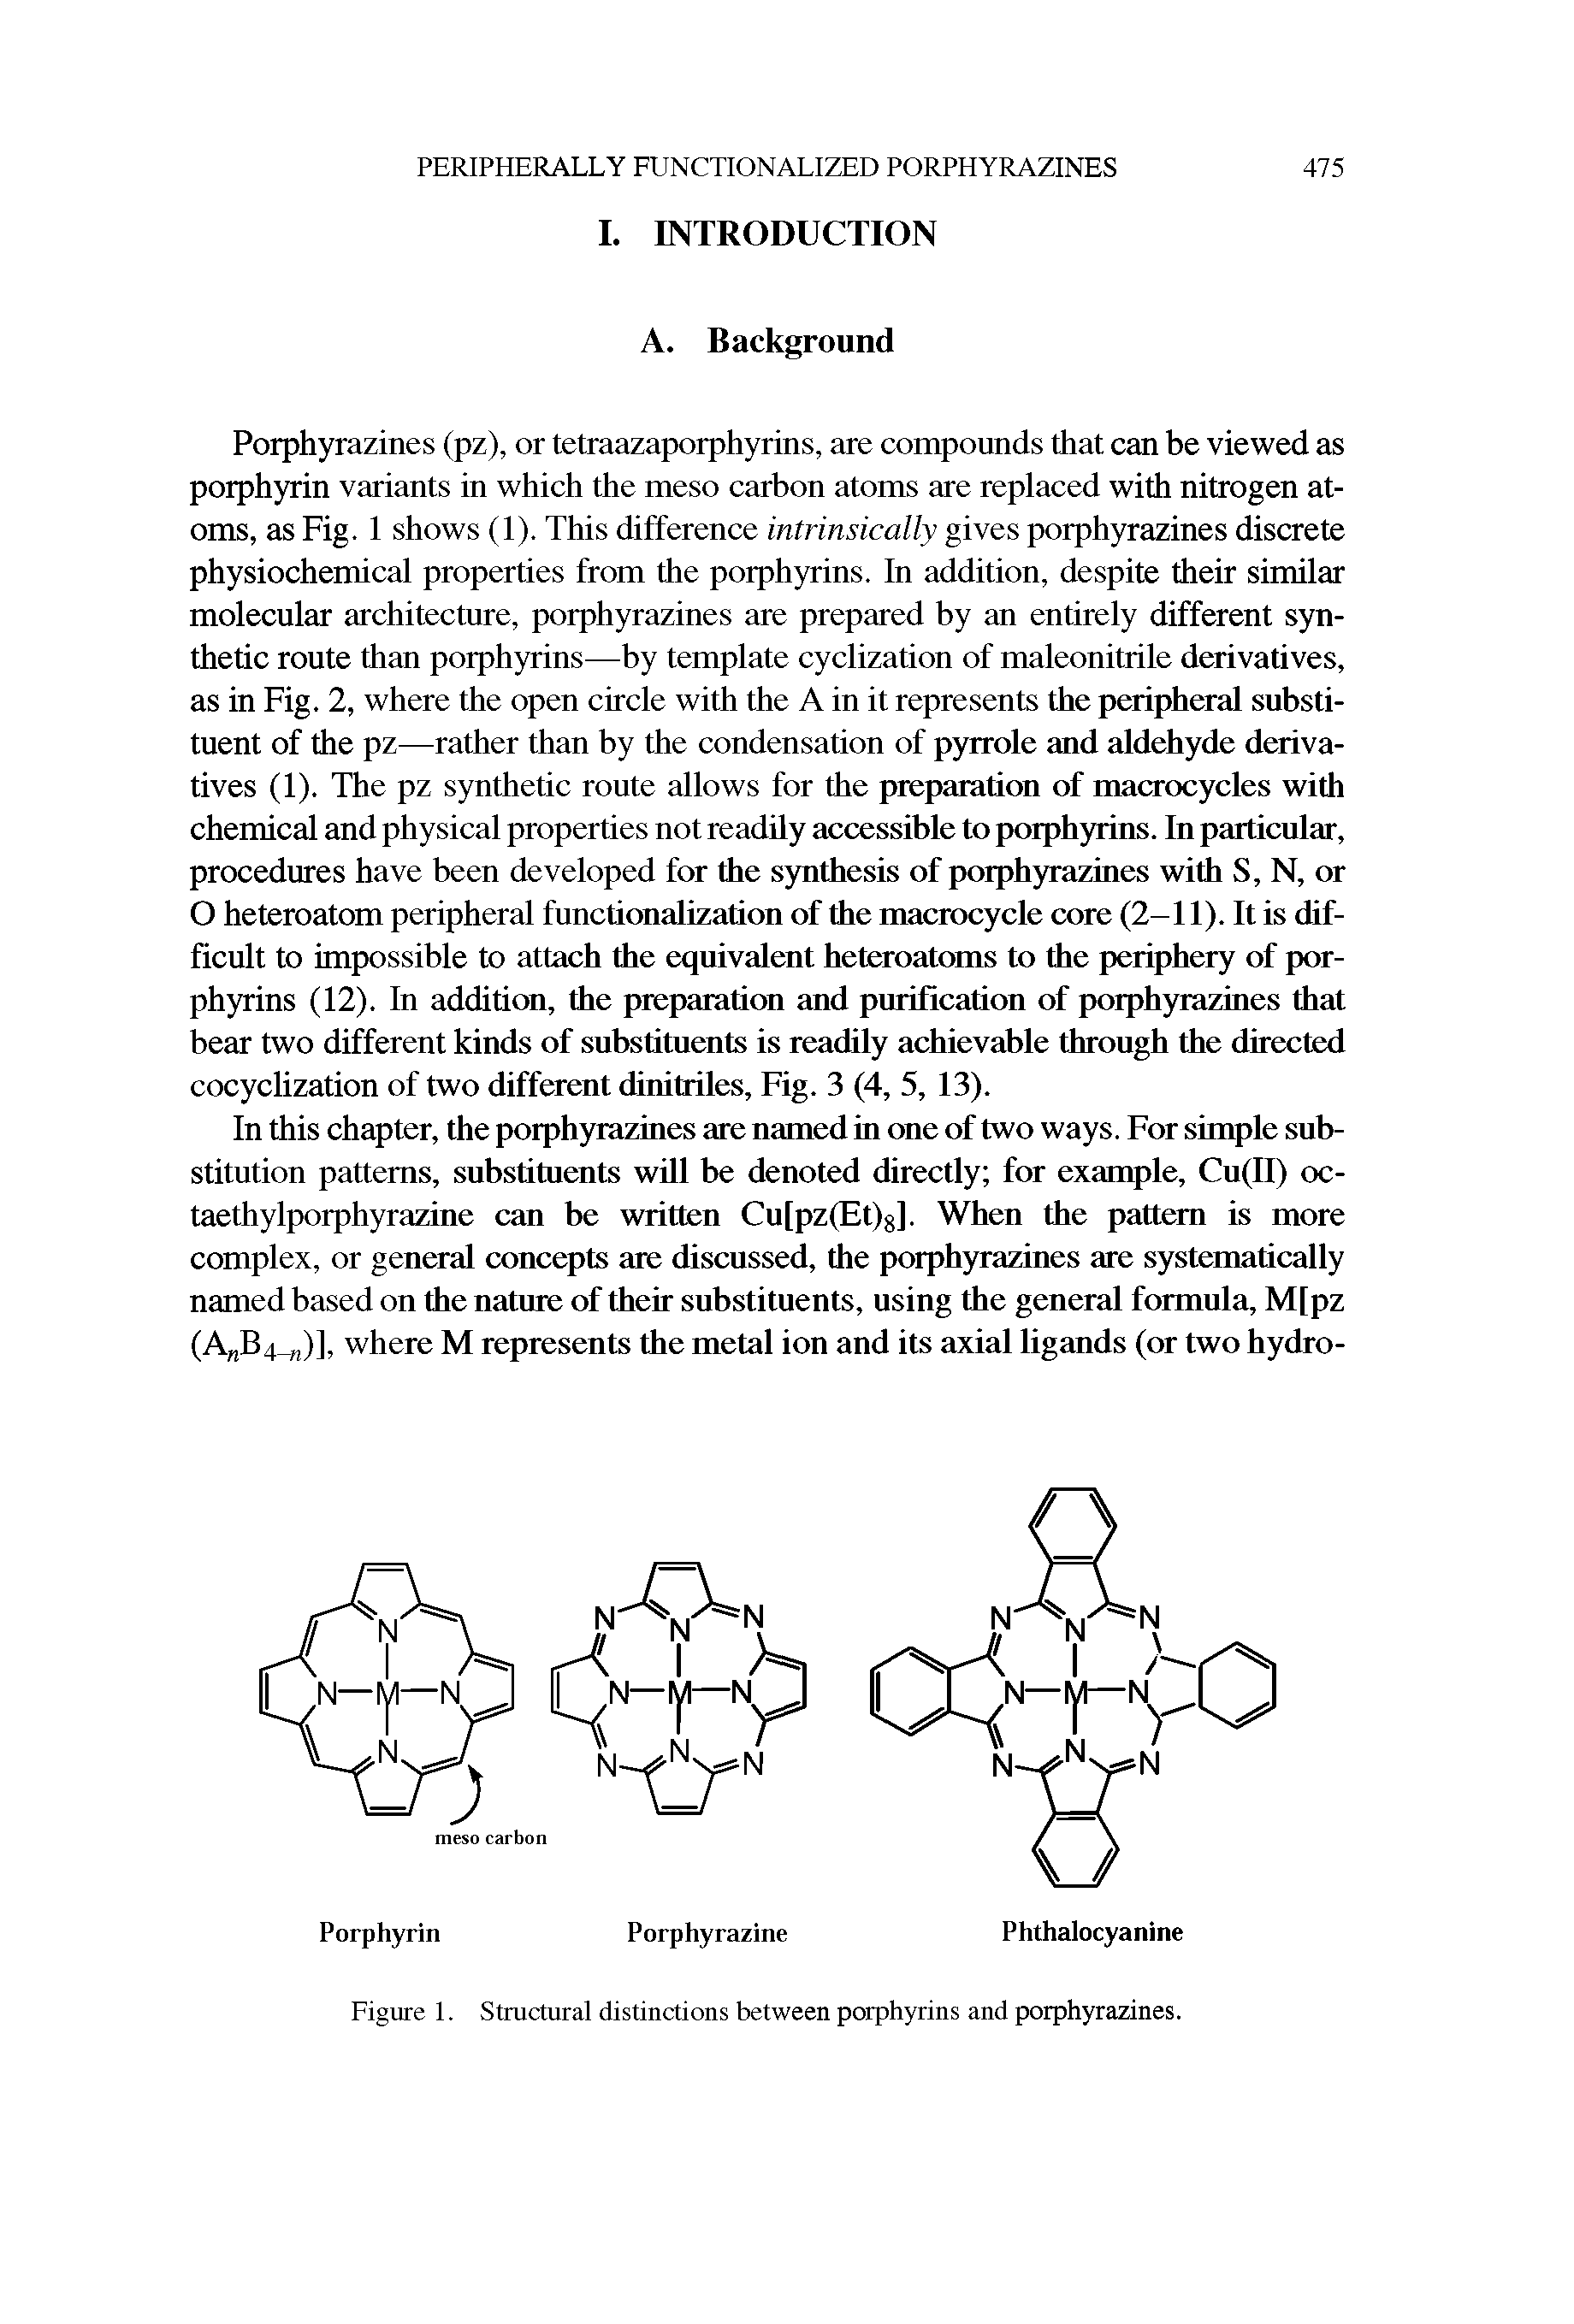 Figure 1. Structural distinctions between porphyrins and porphyrazines.